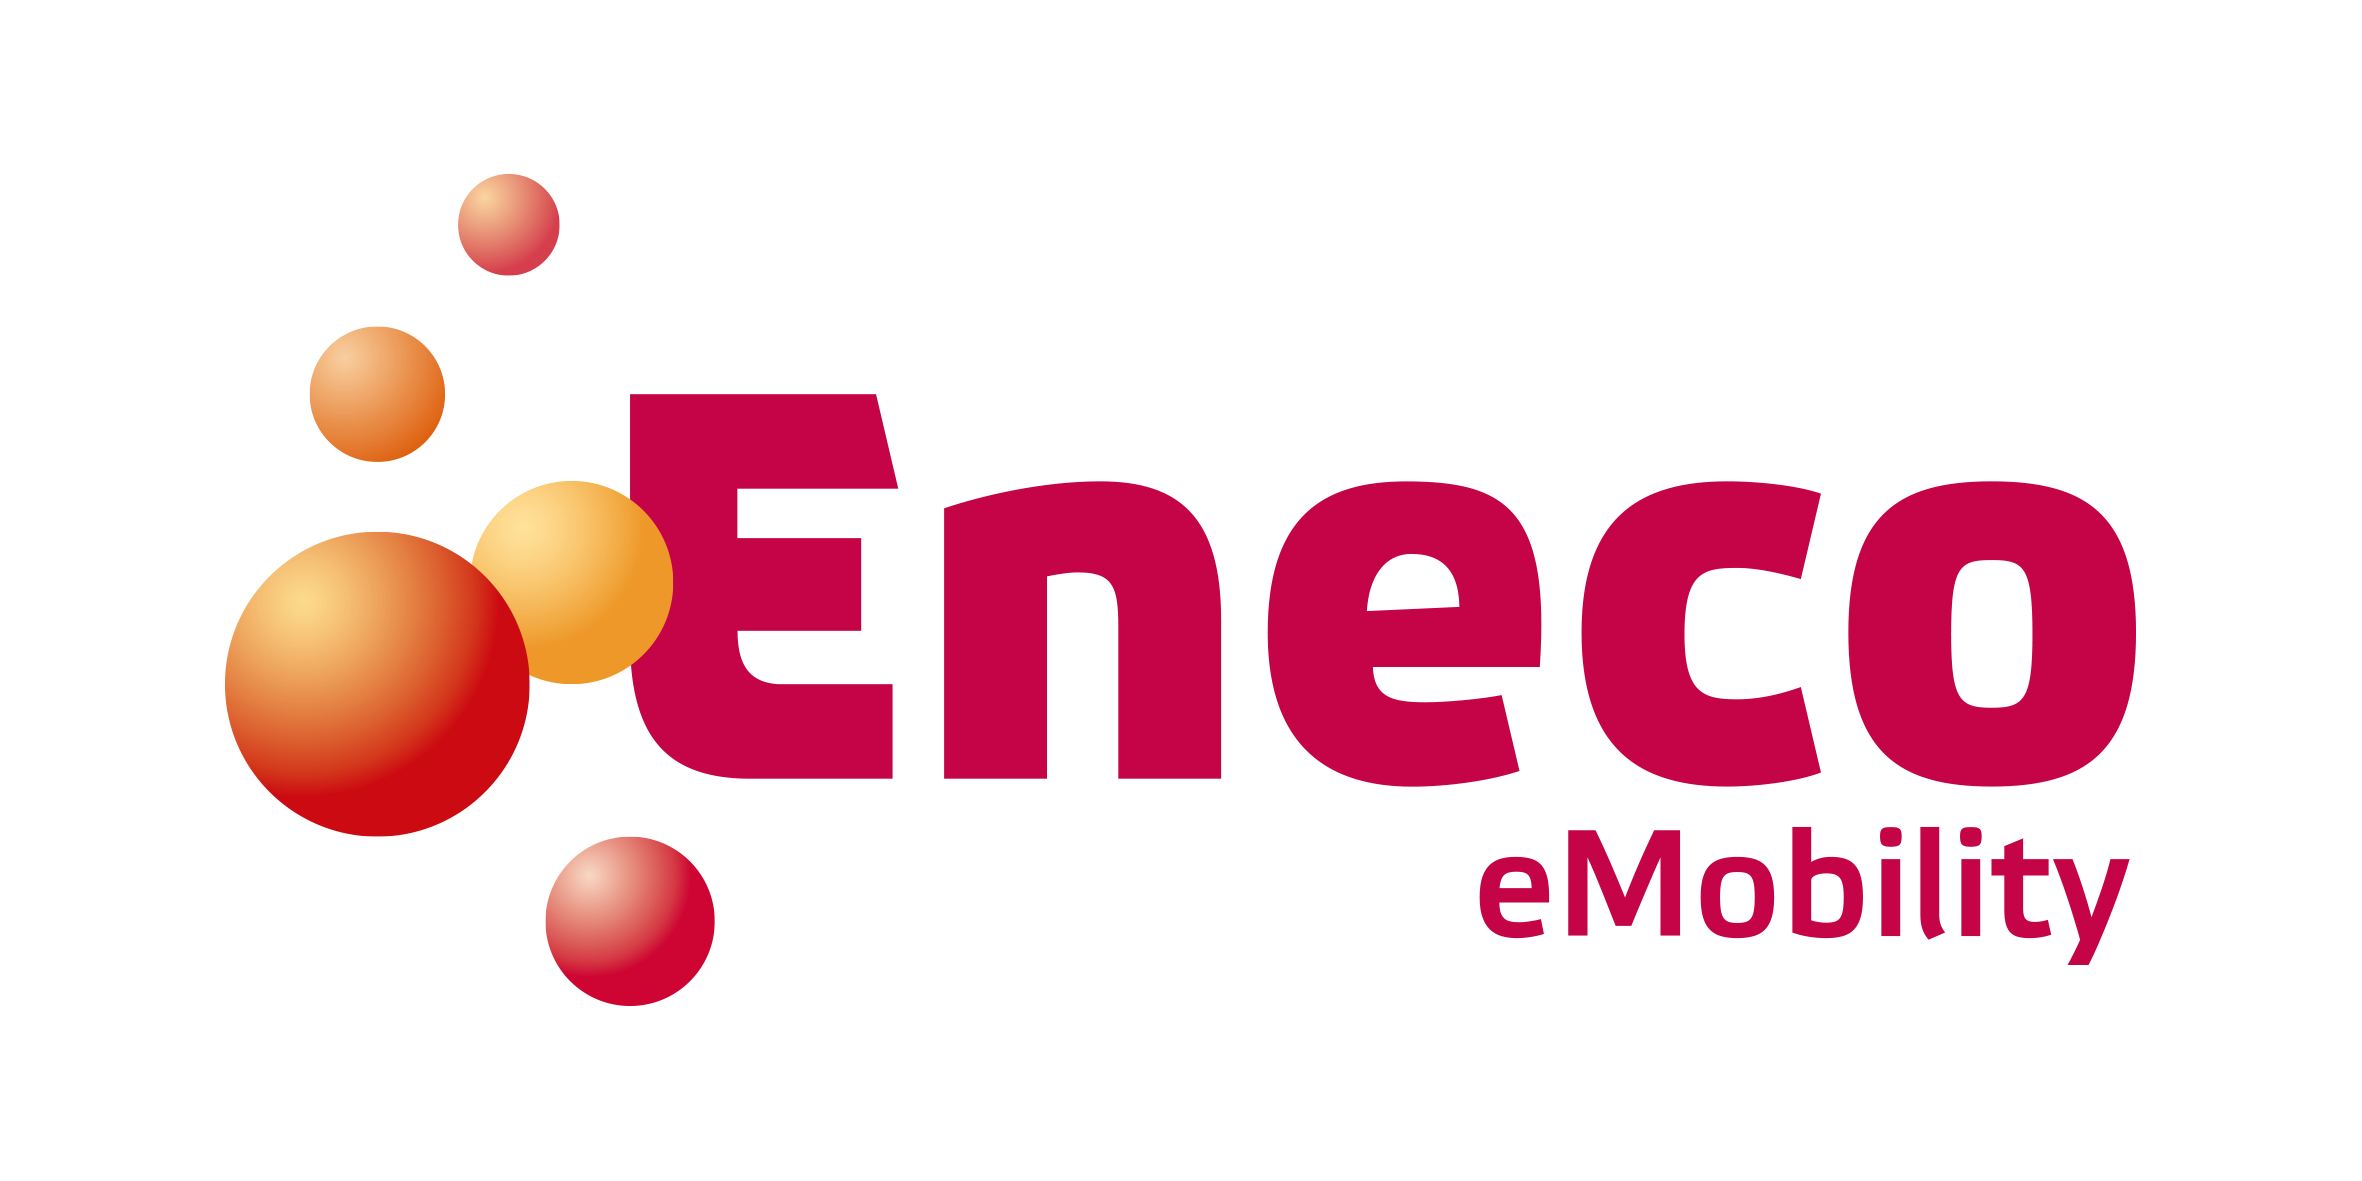 Charge card logo of Eneco